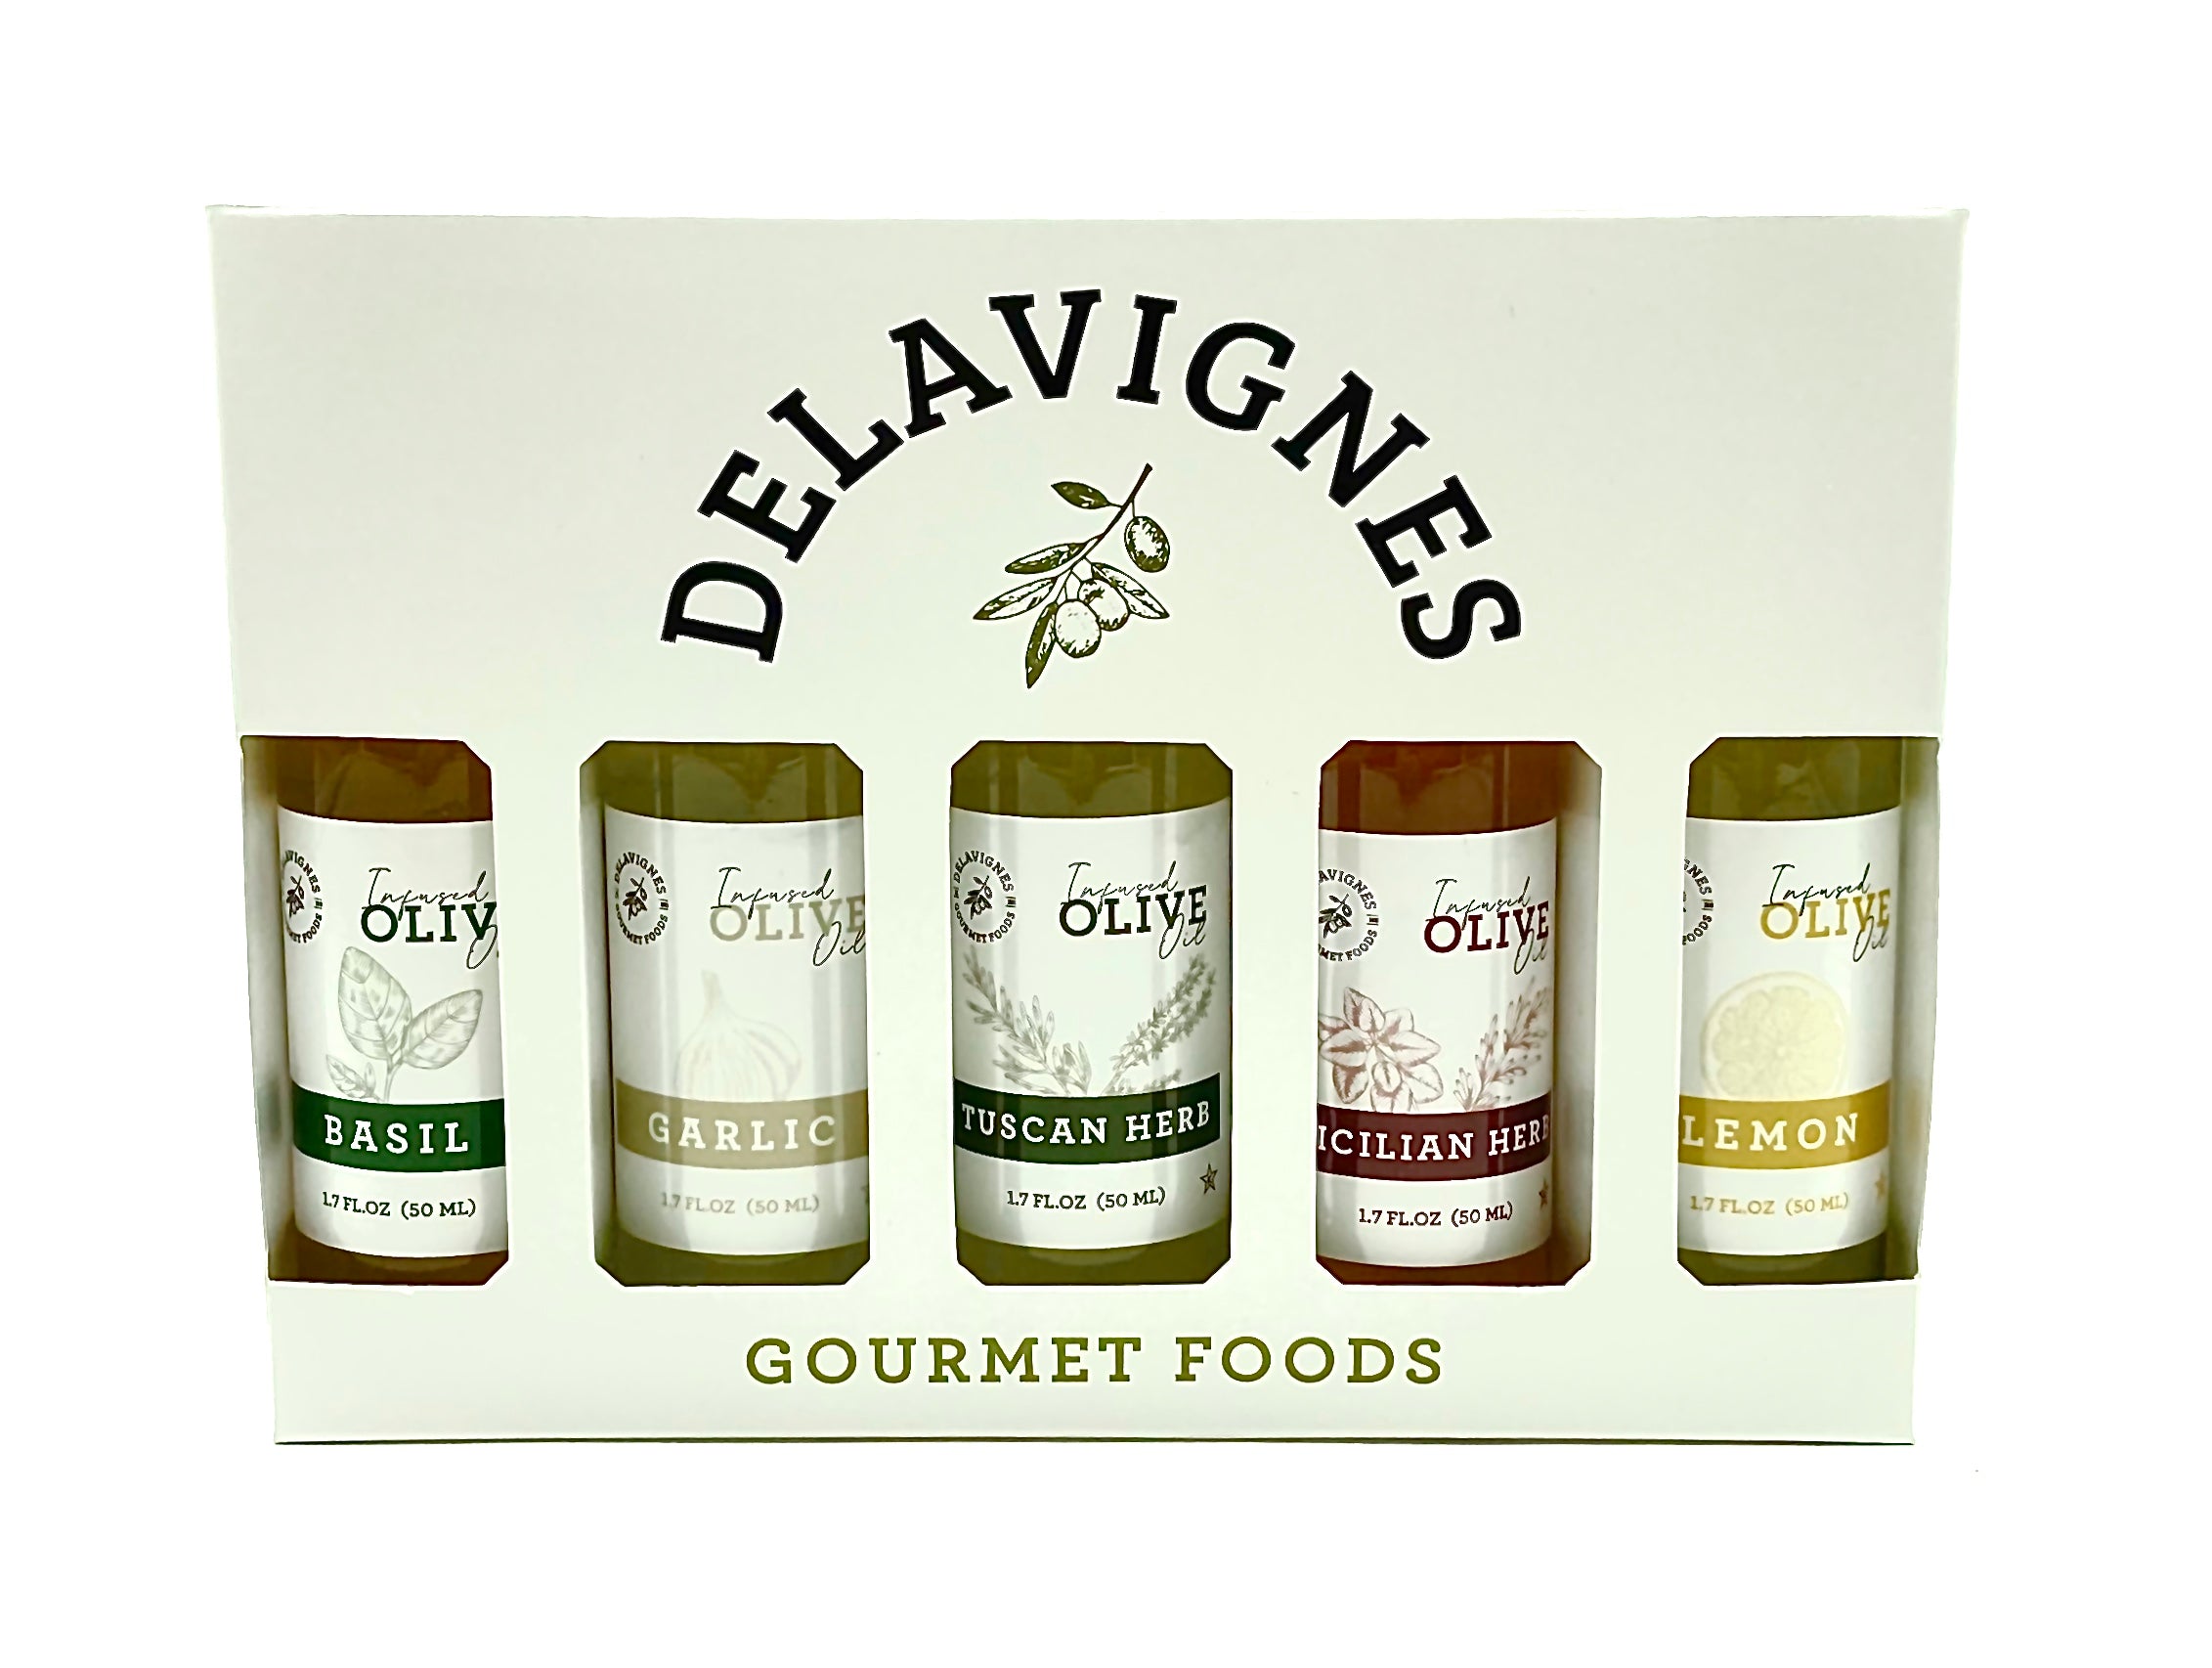 3 Pack Premium Baking Extract Gift Set – Delavignes Gourmet Food